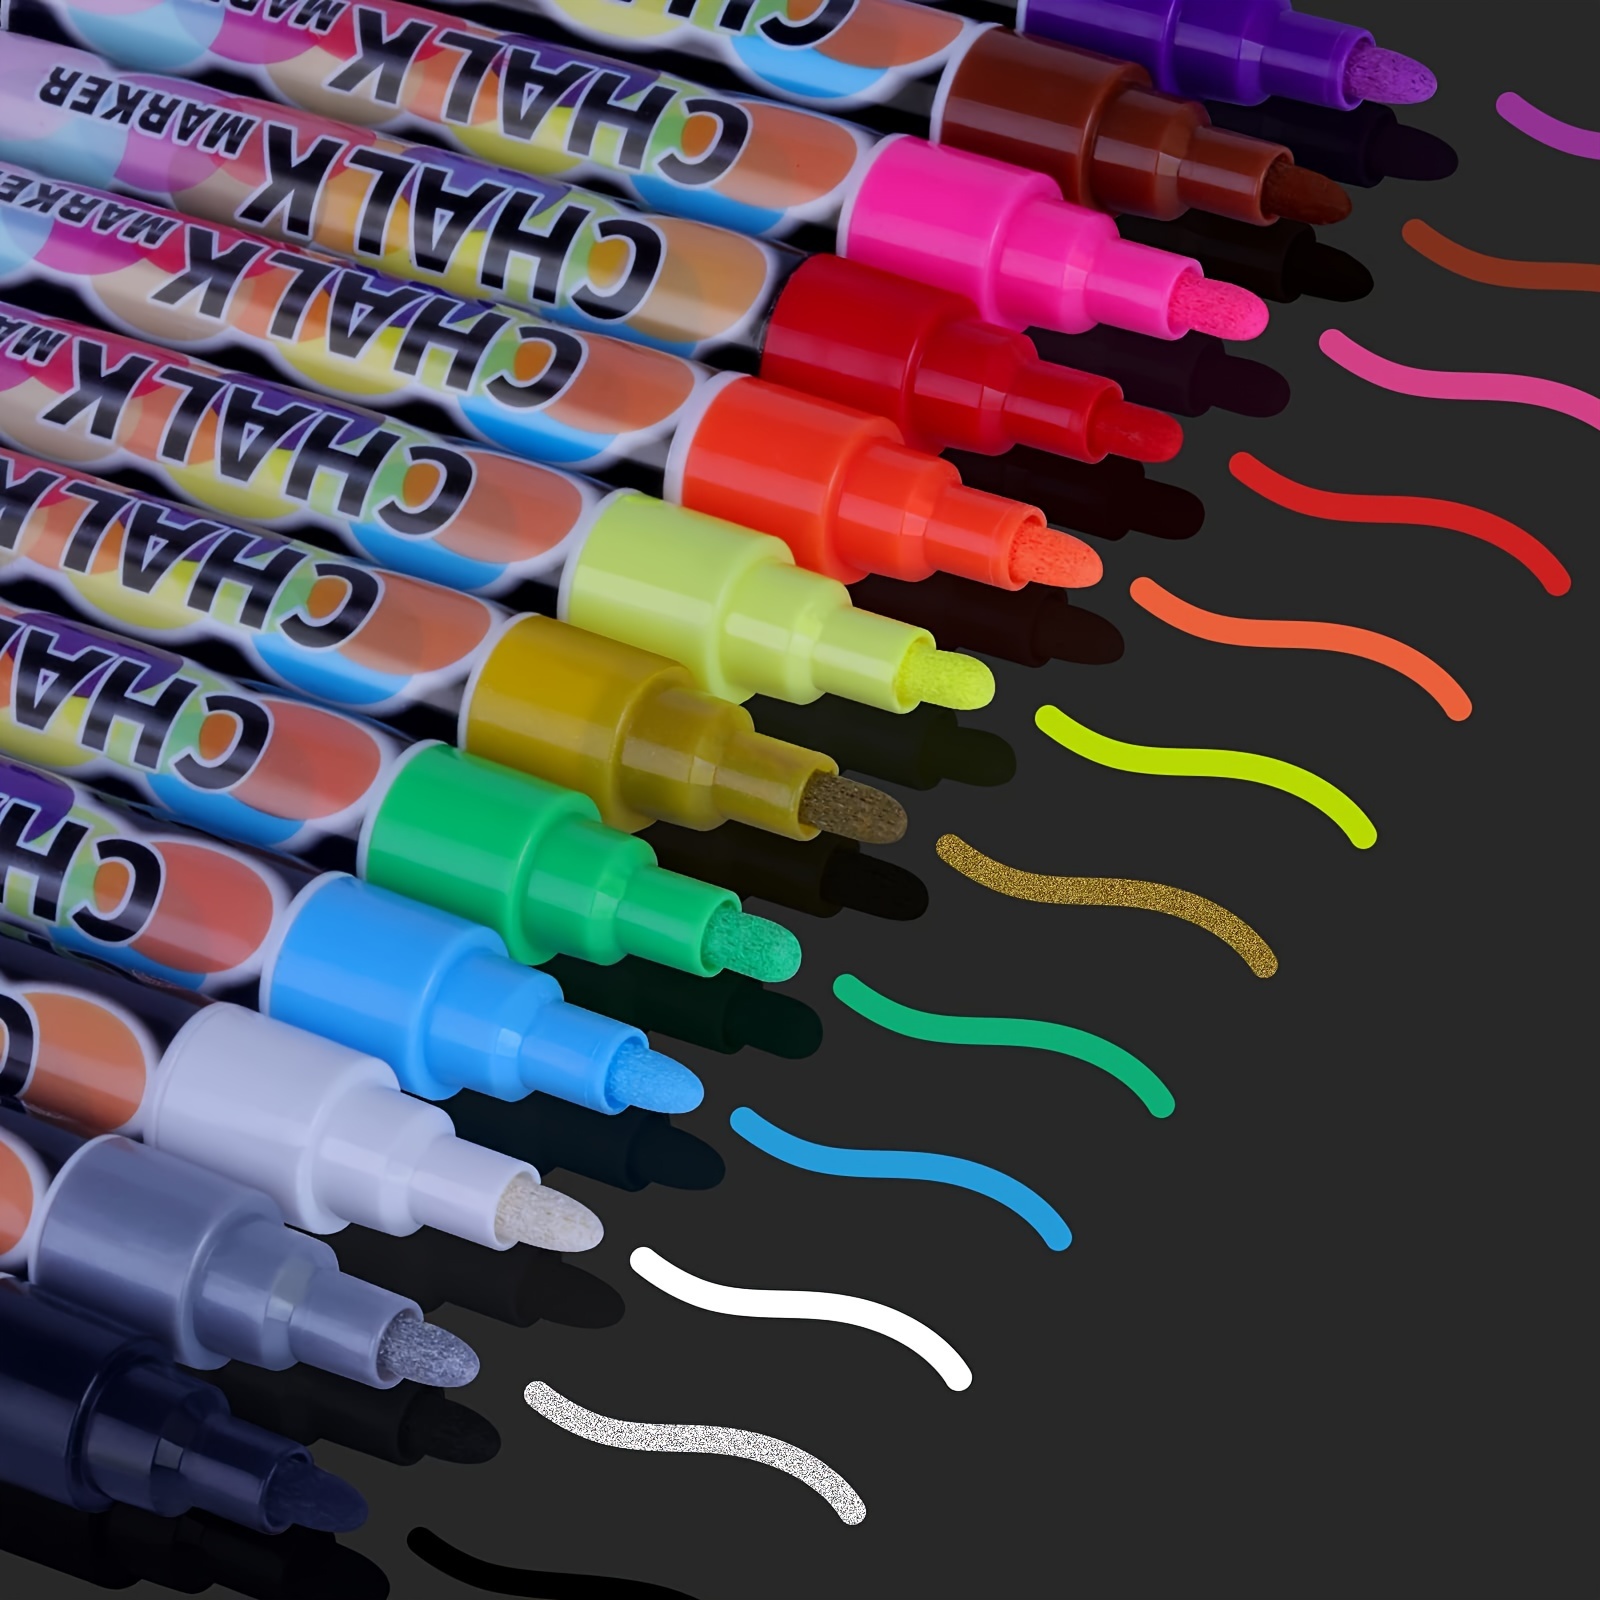 Window Marker 8 Pens,Liquid Chalk Markers,Erasable,Non Toxic,Chalk  Pen,Liquid Ink